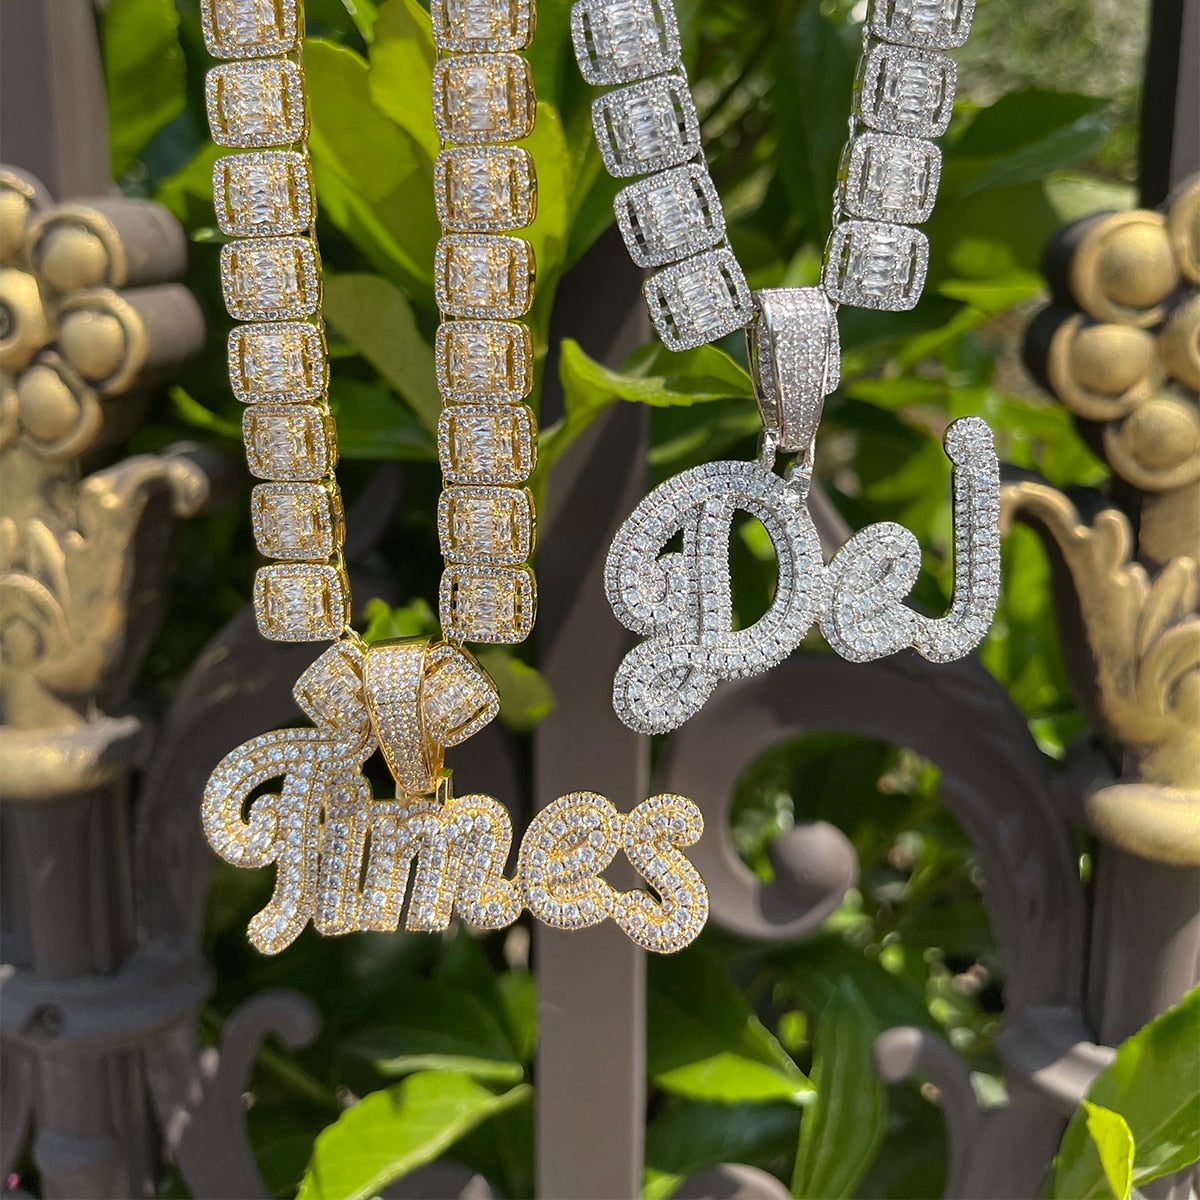 Custom Name Necklace | Personalized Jewelry